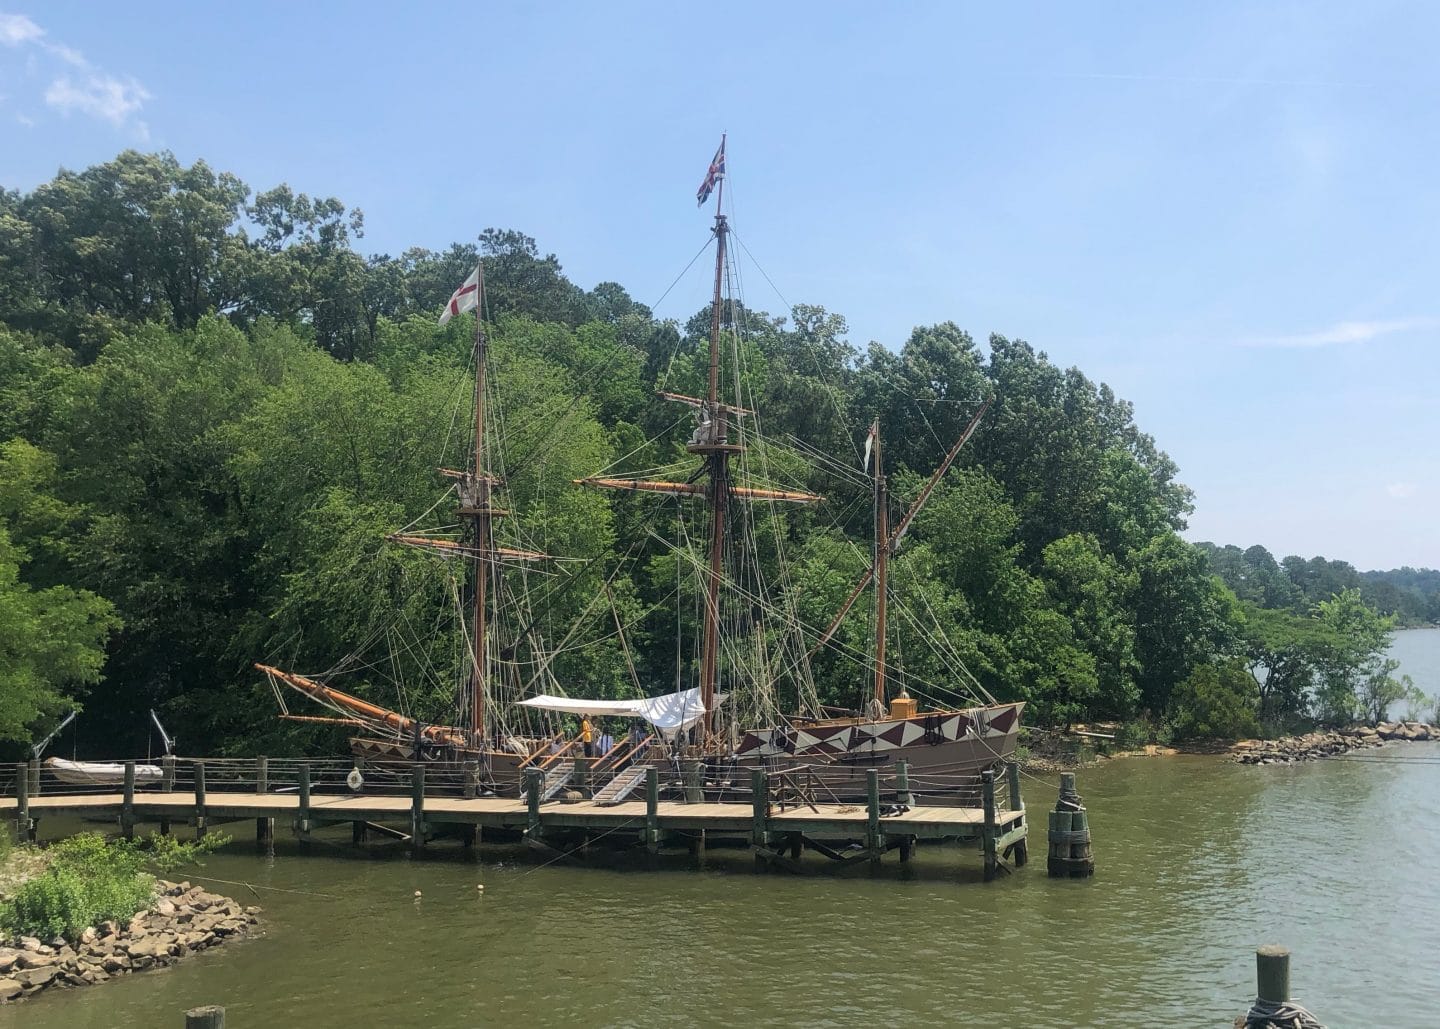 Jamestown Settlement in Virginia boats settlers arrived in